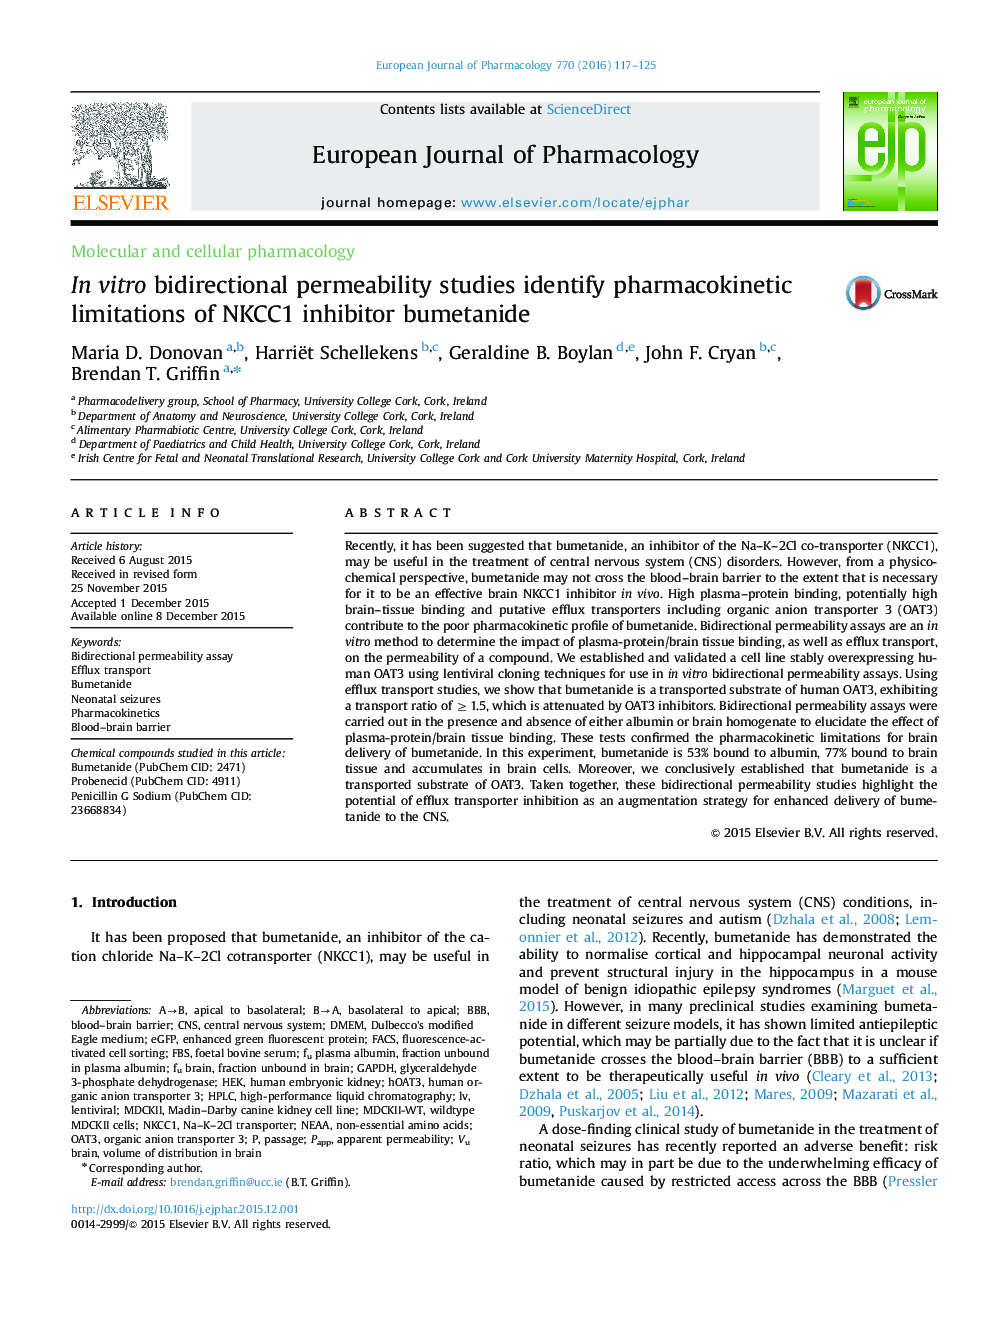 In vitro bidirectional permeability studies identify pharmacokinetic limitations of NKCC1 inhibitor bumetanide